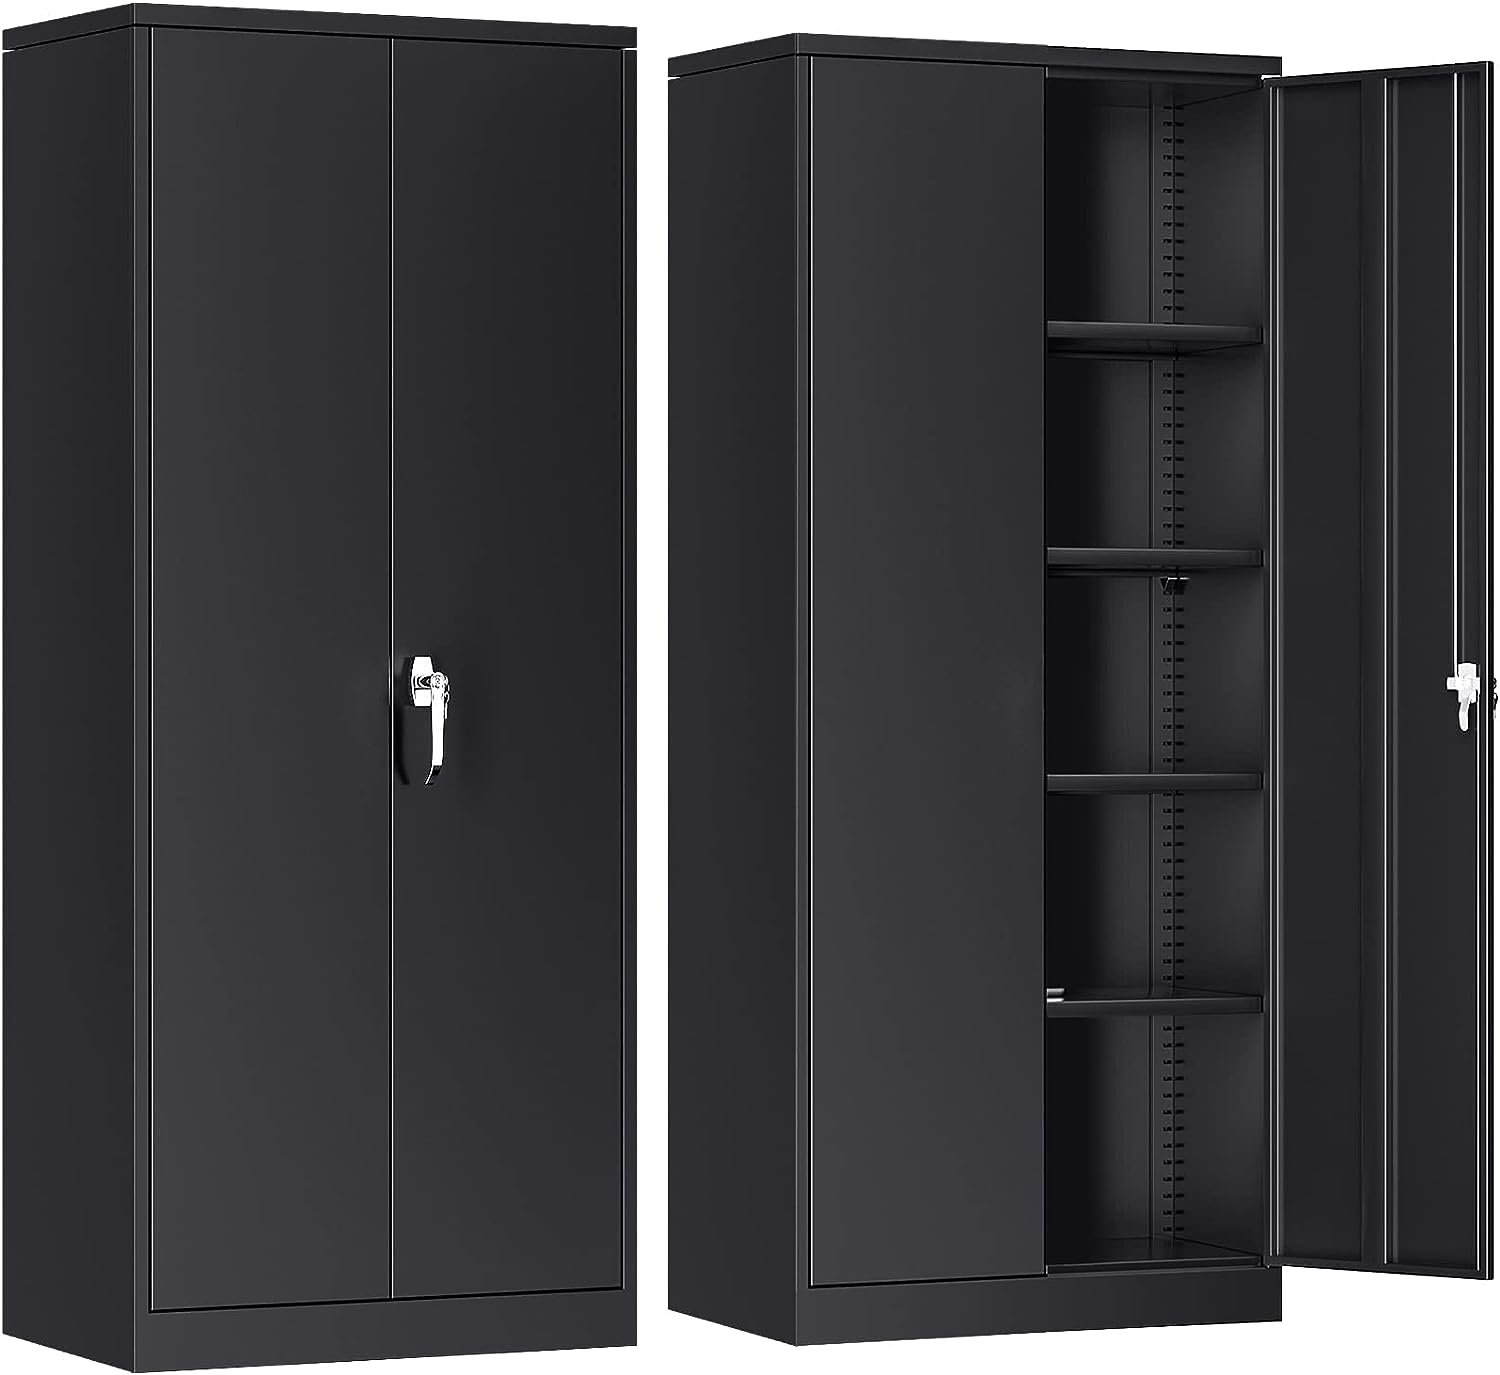 Atripark Metal Storage Cabinet with Lock, 72